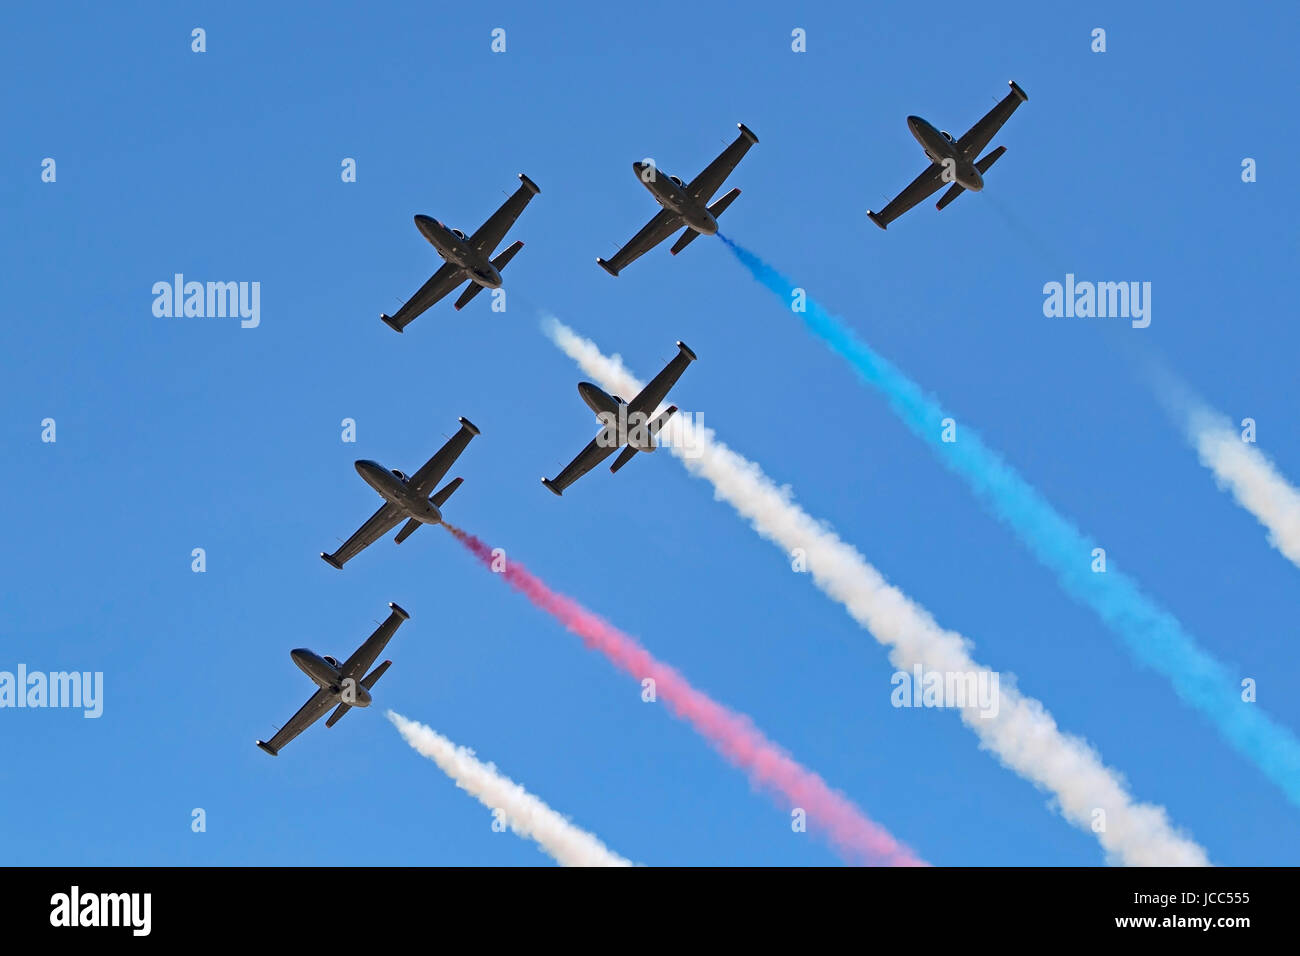 Airplane Patriots Jet Team L-39 Albatross jets perform at air show Stock Photo